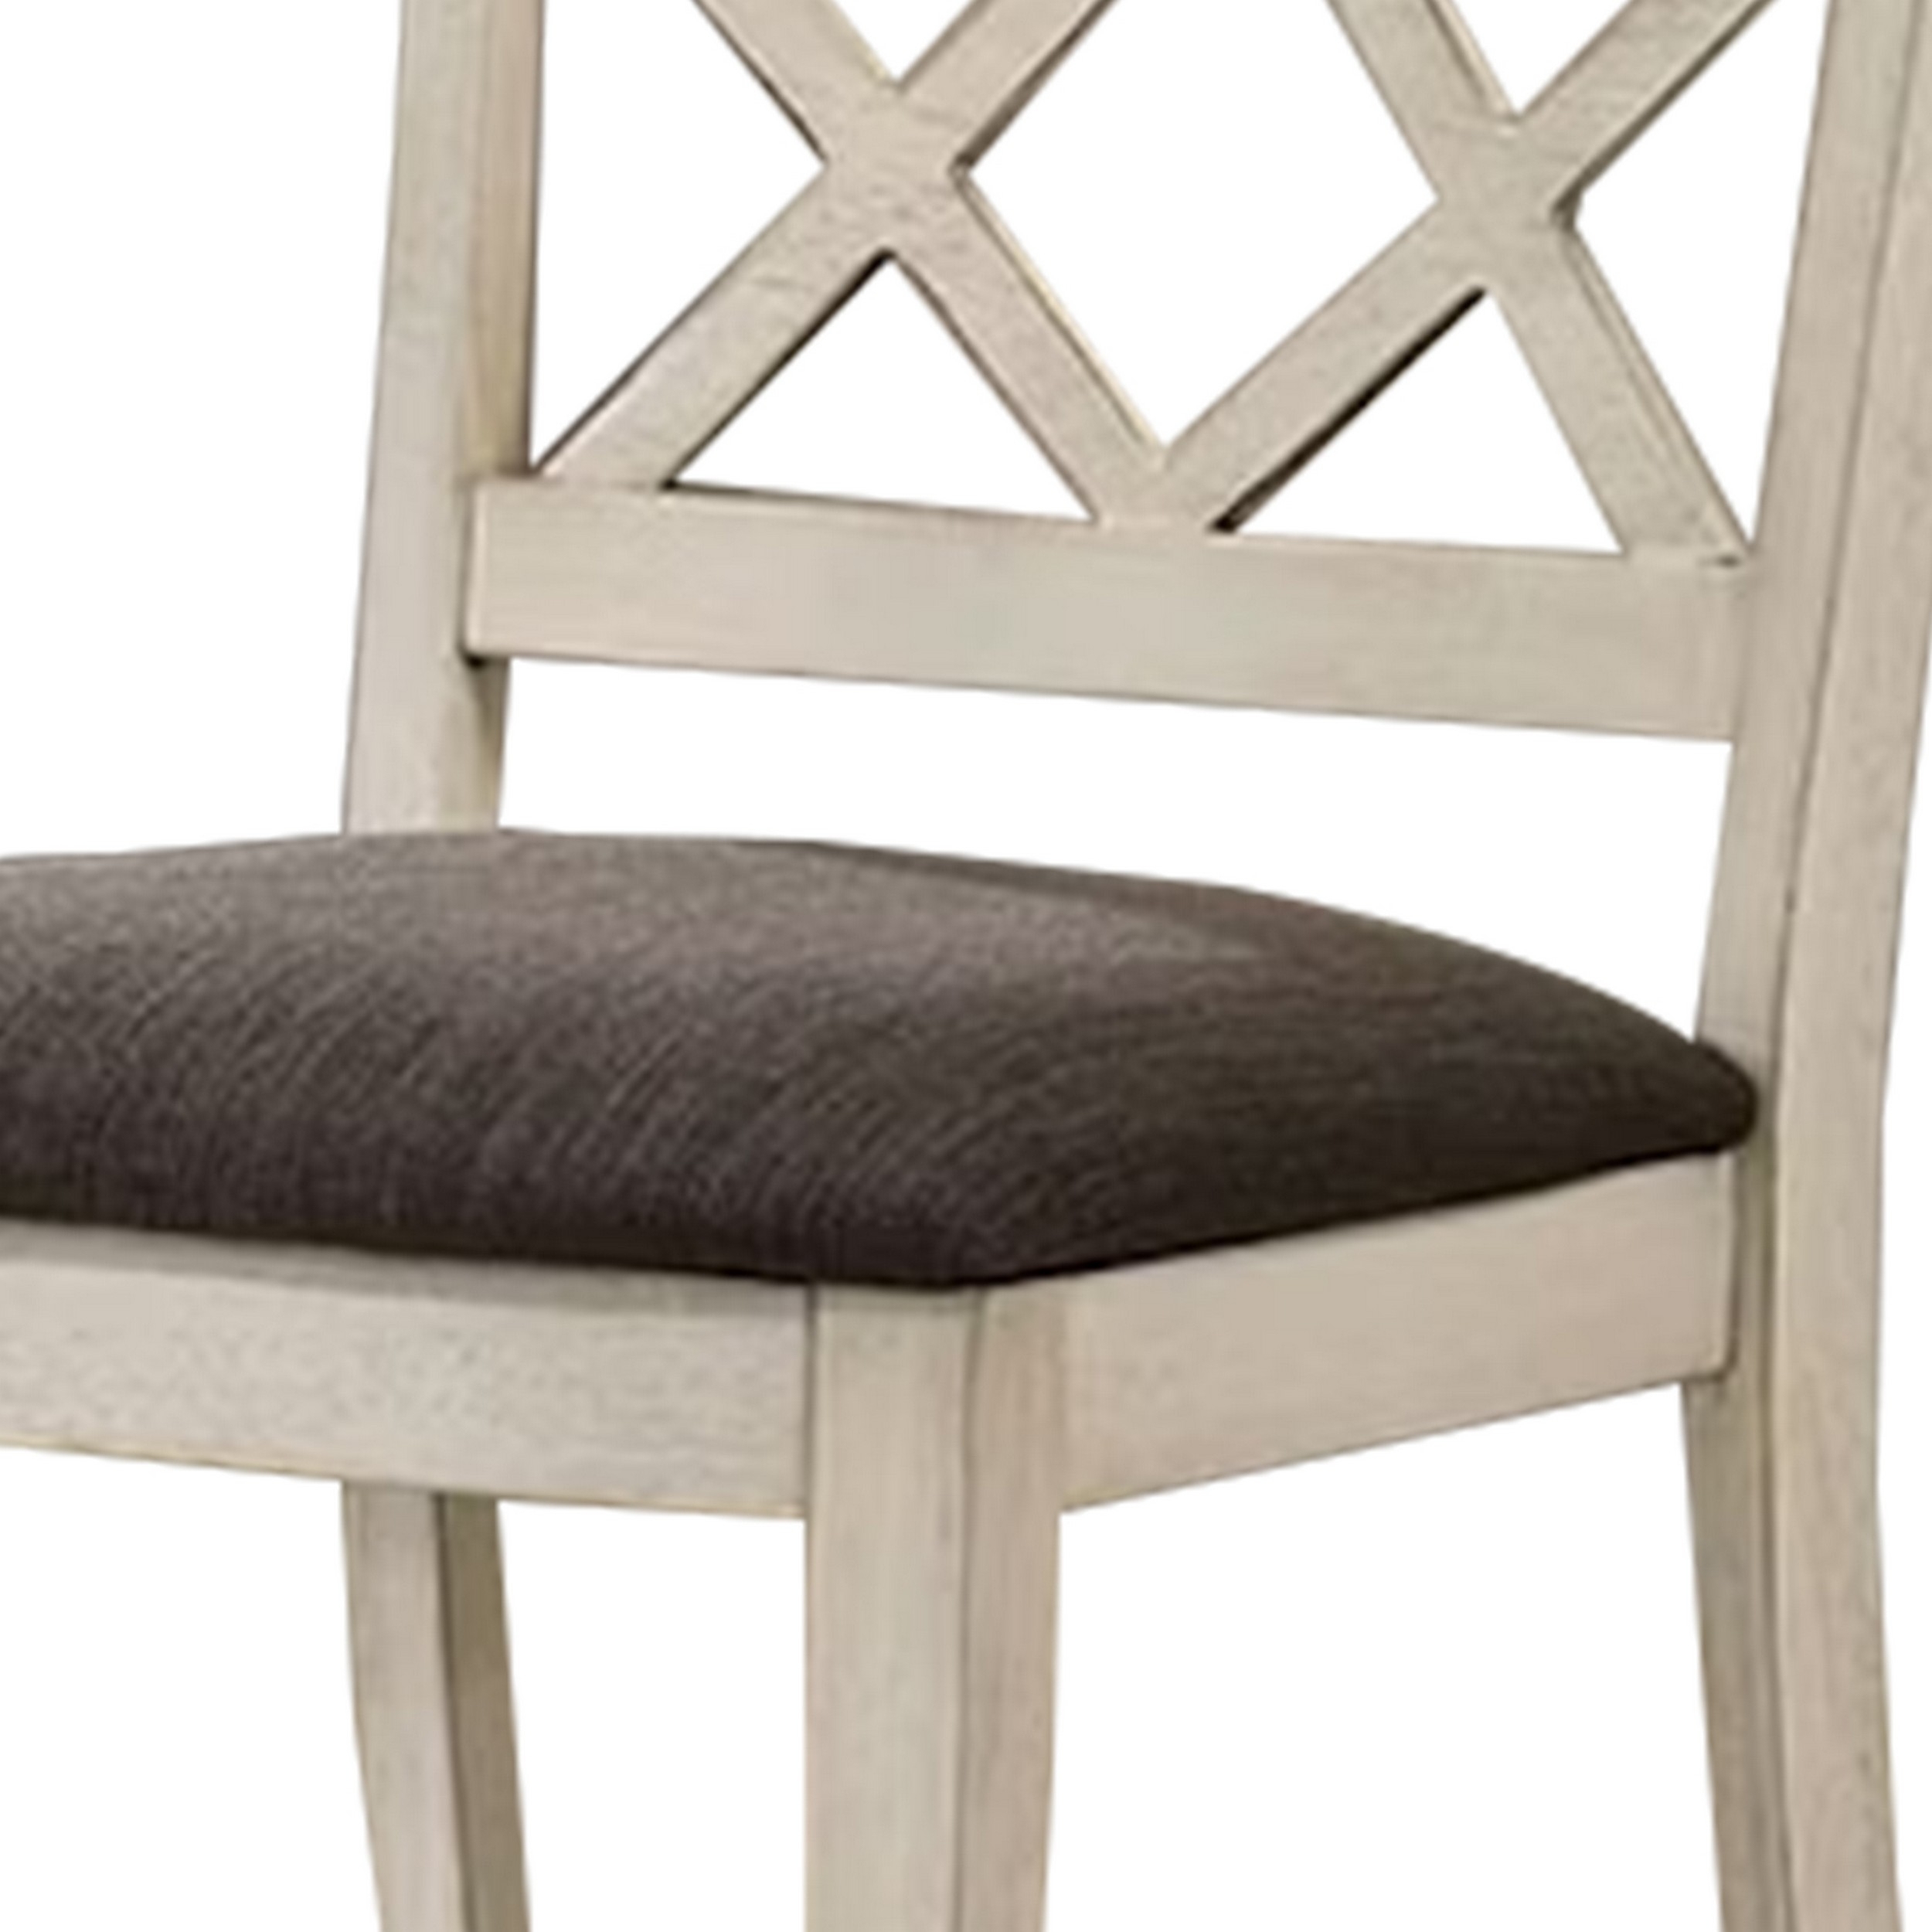 Ara 18 Inch Dining Chair, Set Of 2, Crossbuck Back, White Wood, Gray Fabric- Saltoro Sherpi